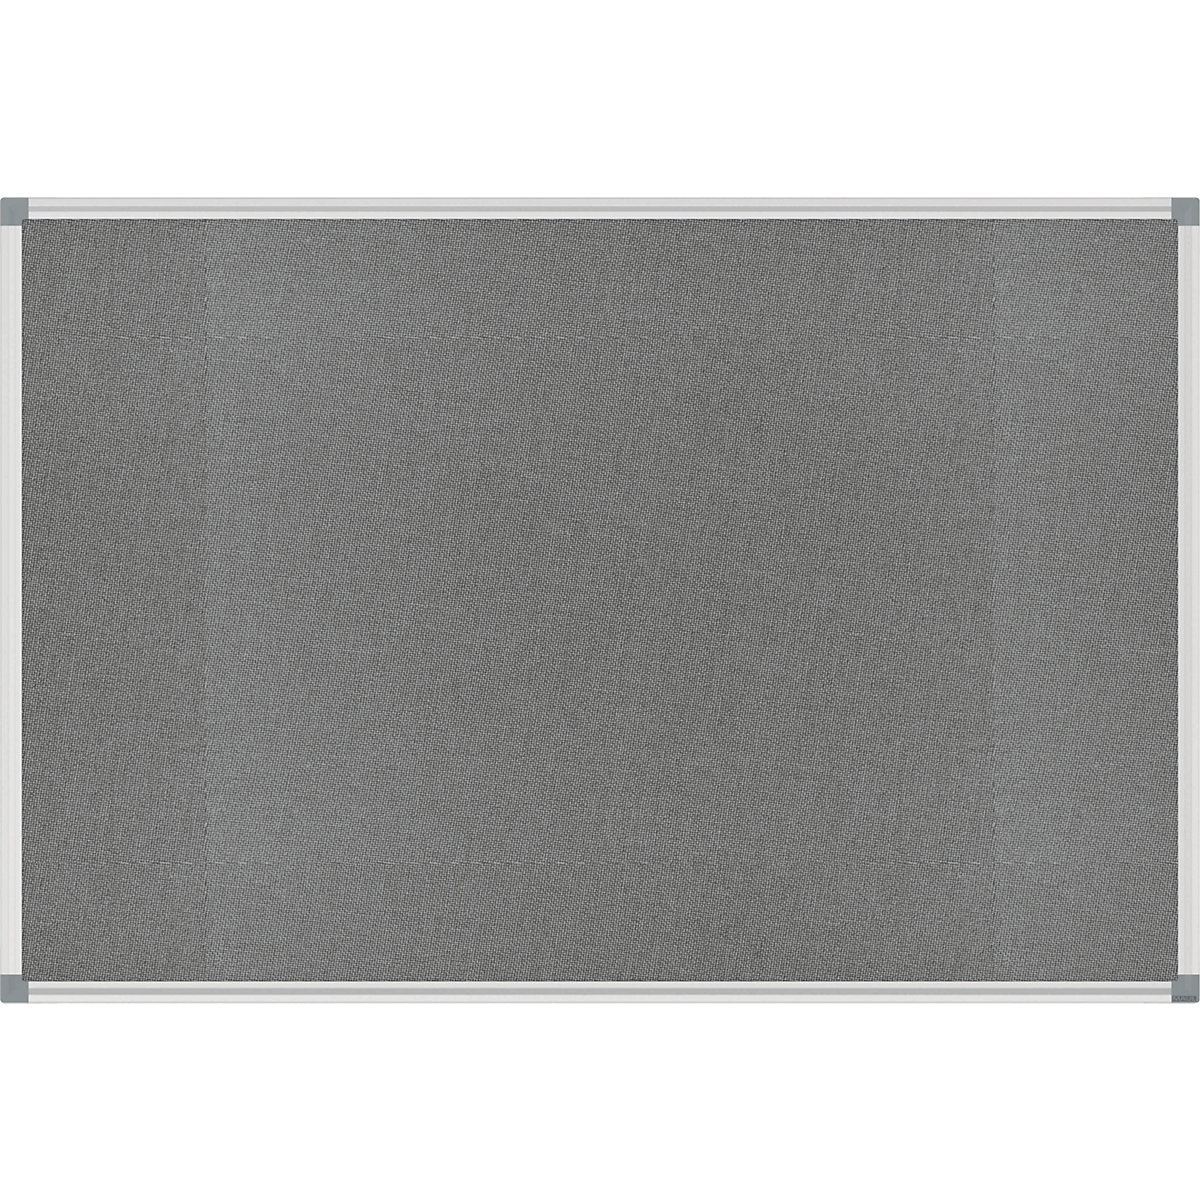 Lavagna a spilli STANDARD – MAUL, rivestimento in feltro, grigio, largh. x alt. 900 x 600 mm-3